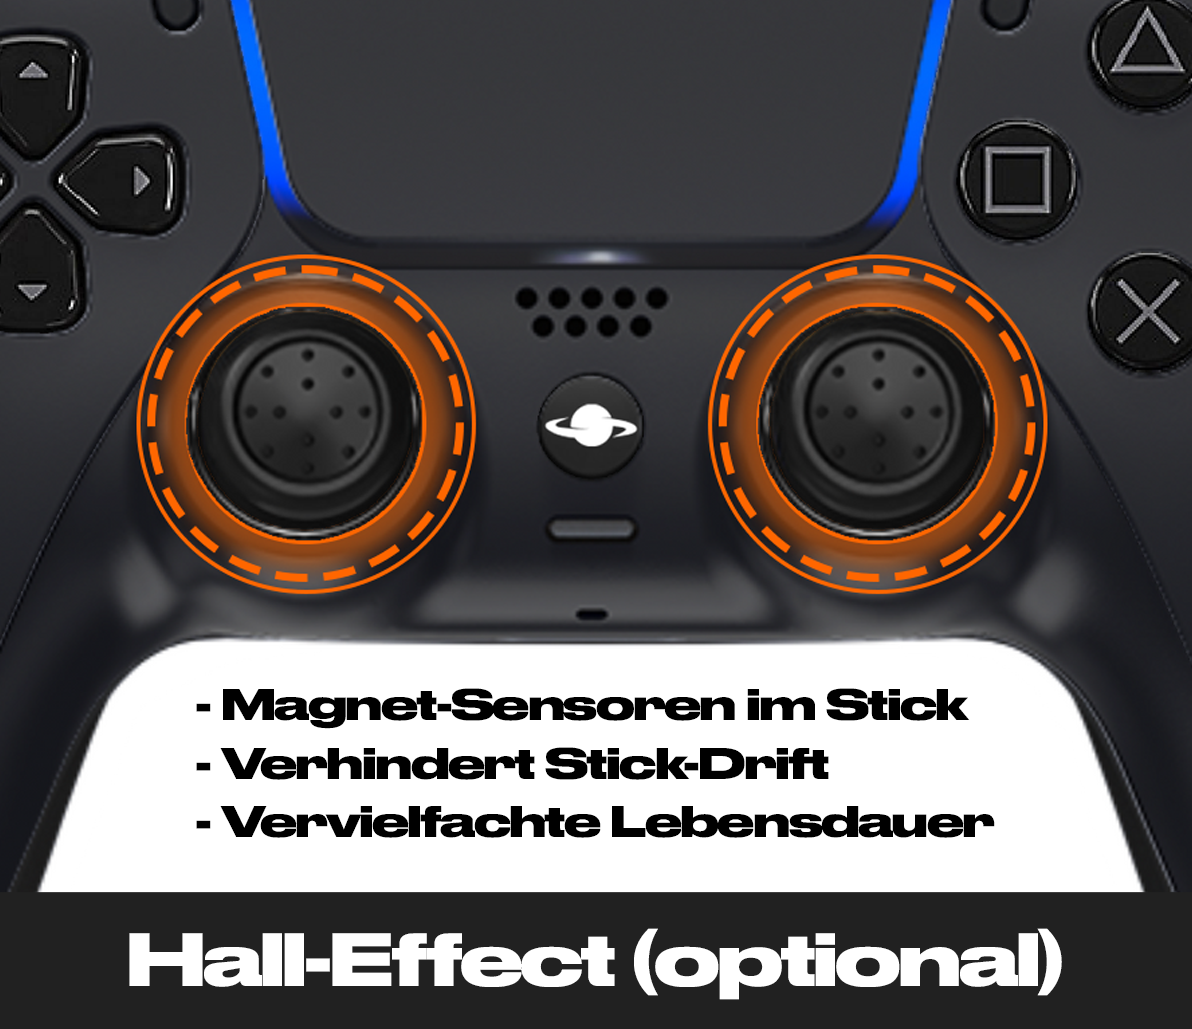 PS5 Custom Controller 'Nachthimmel'